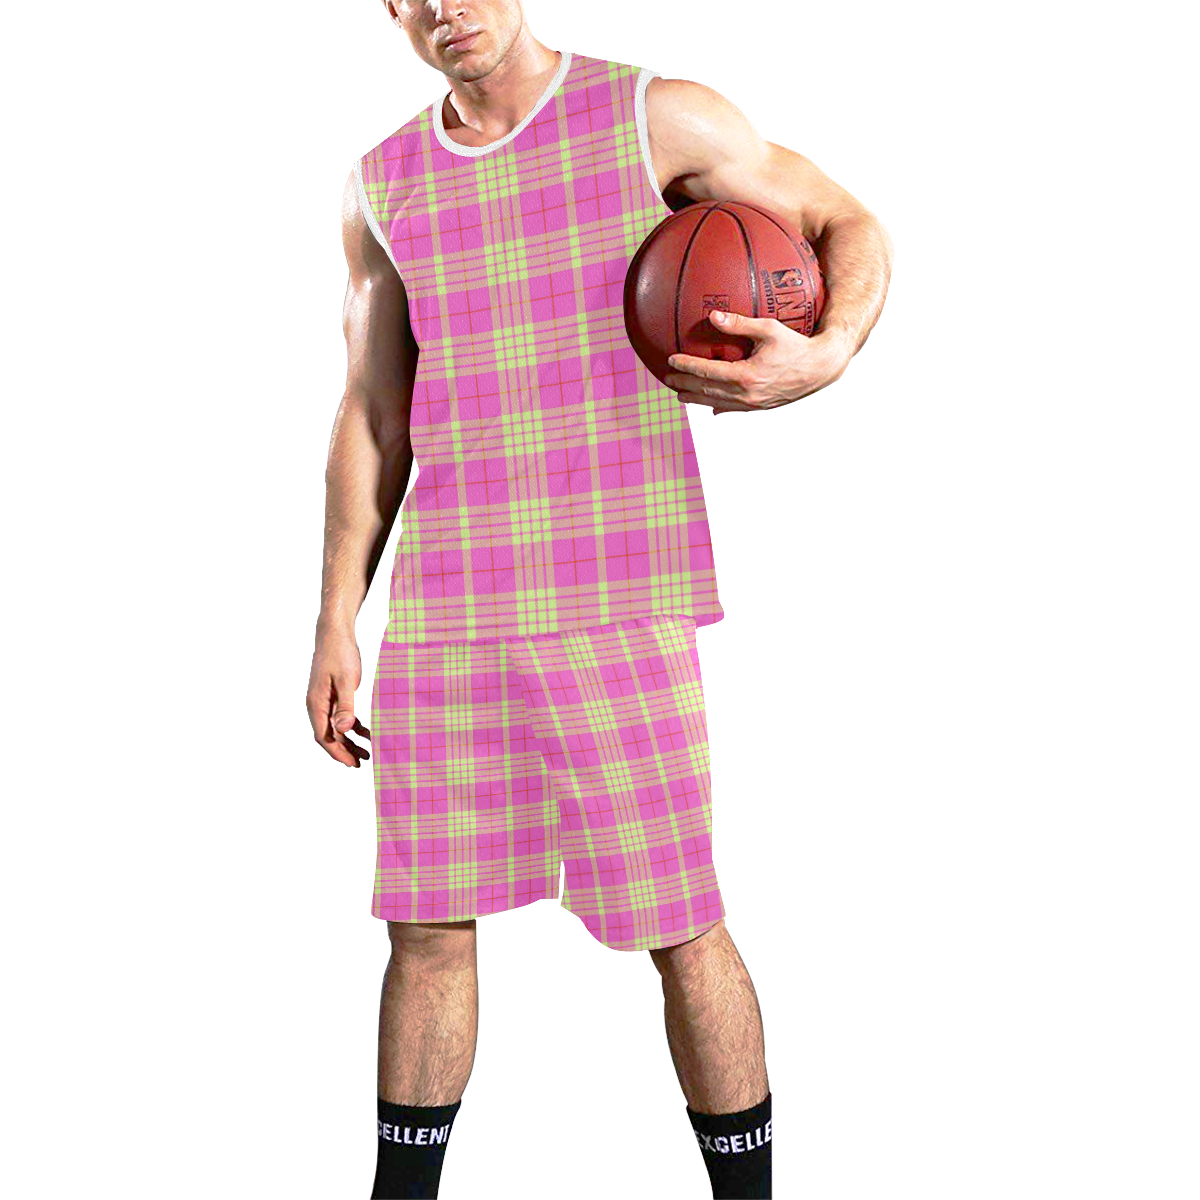 PINK TARTAN 4 All Over Print Basketball Uniform